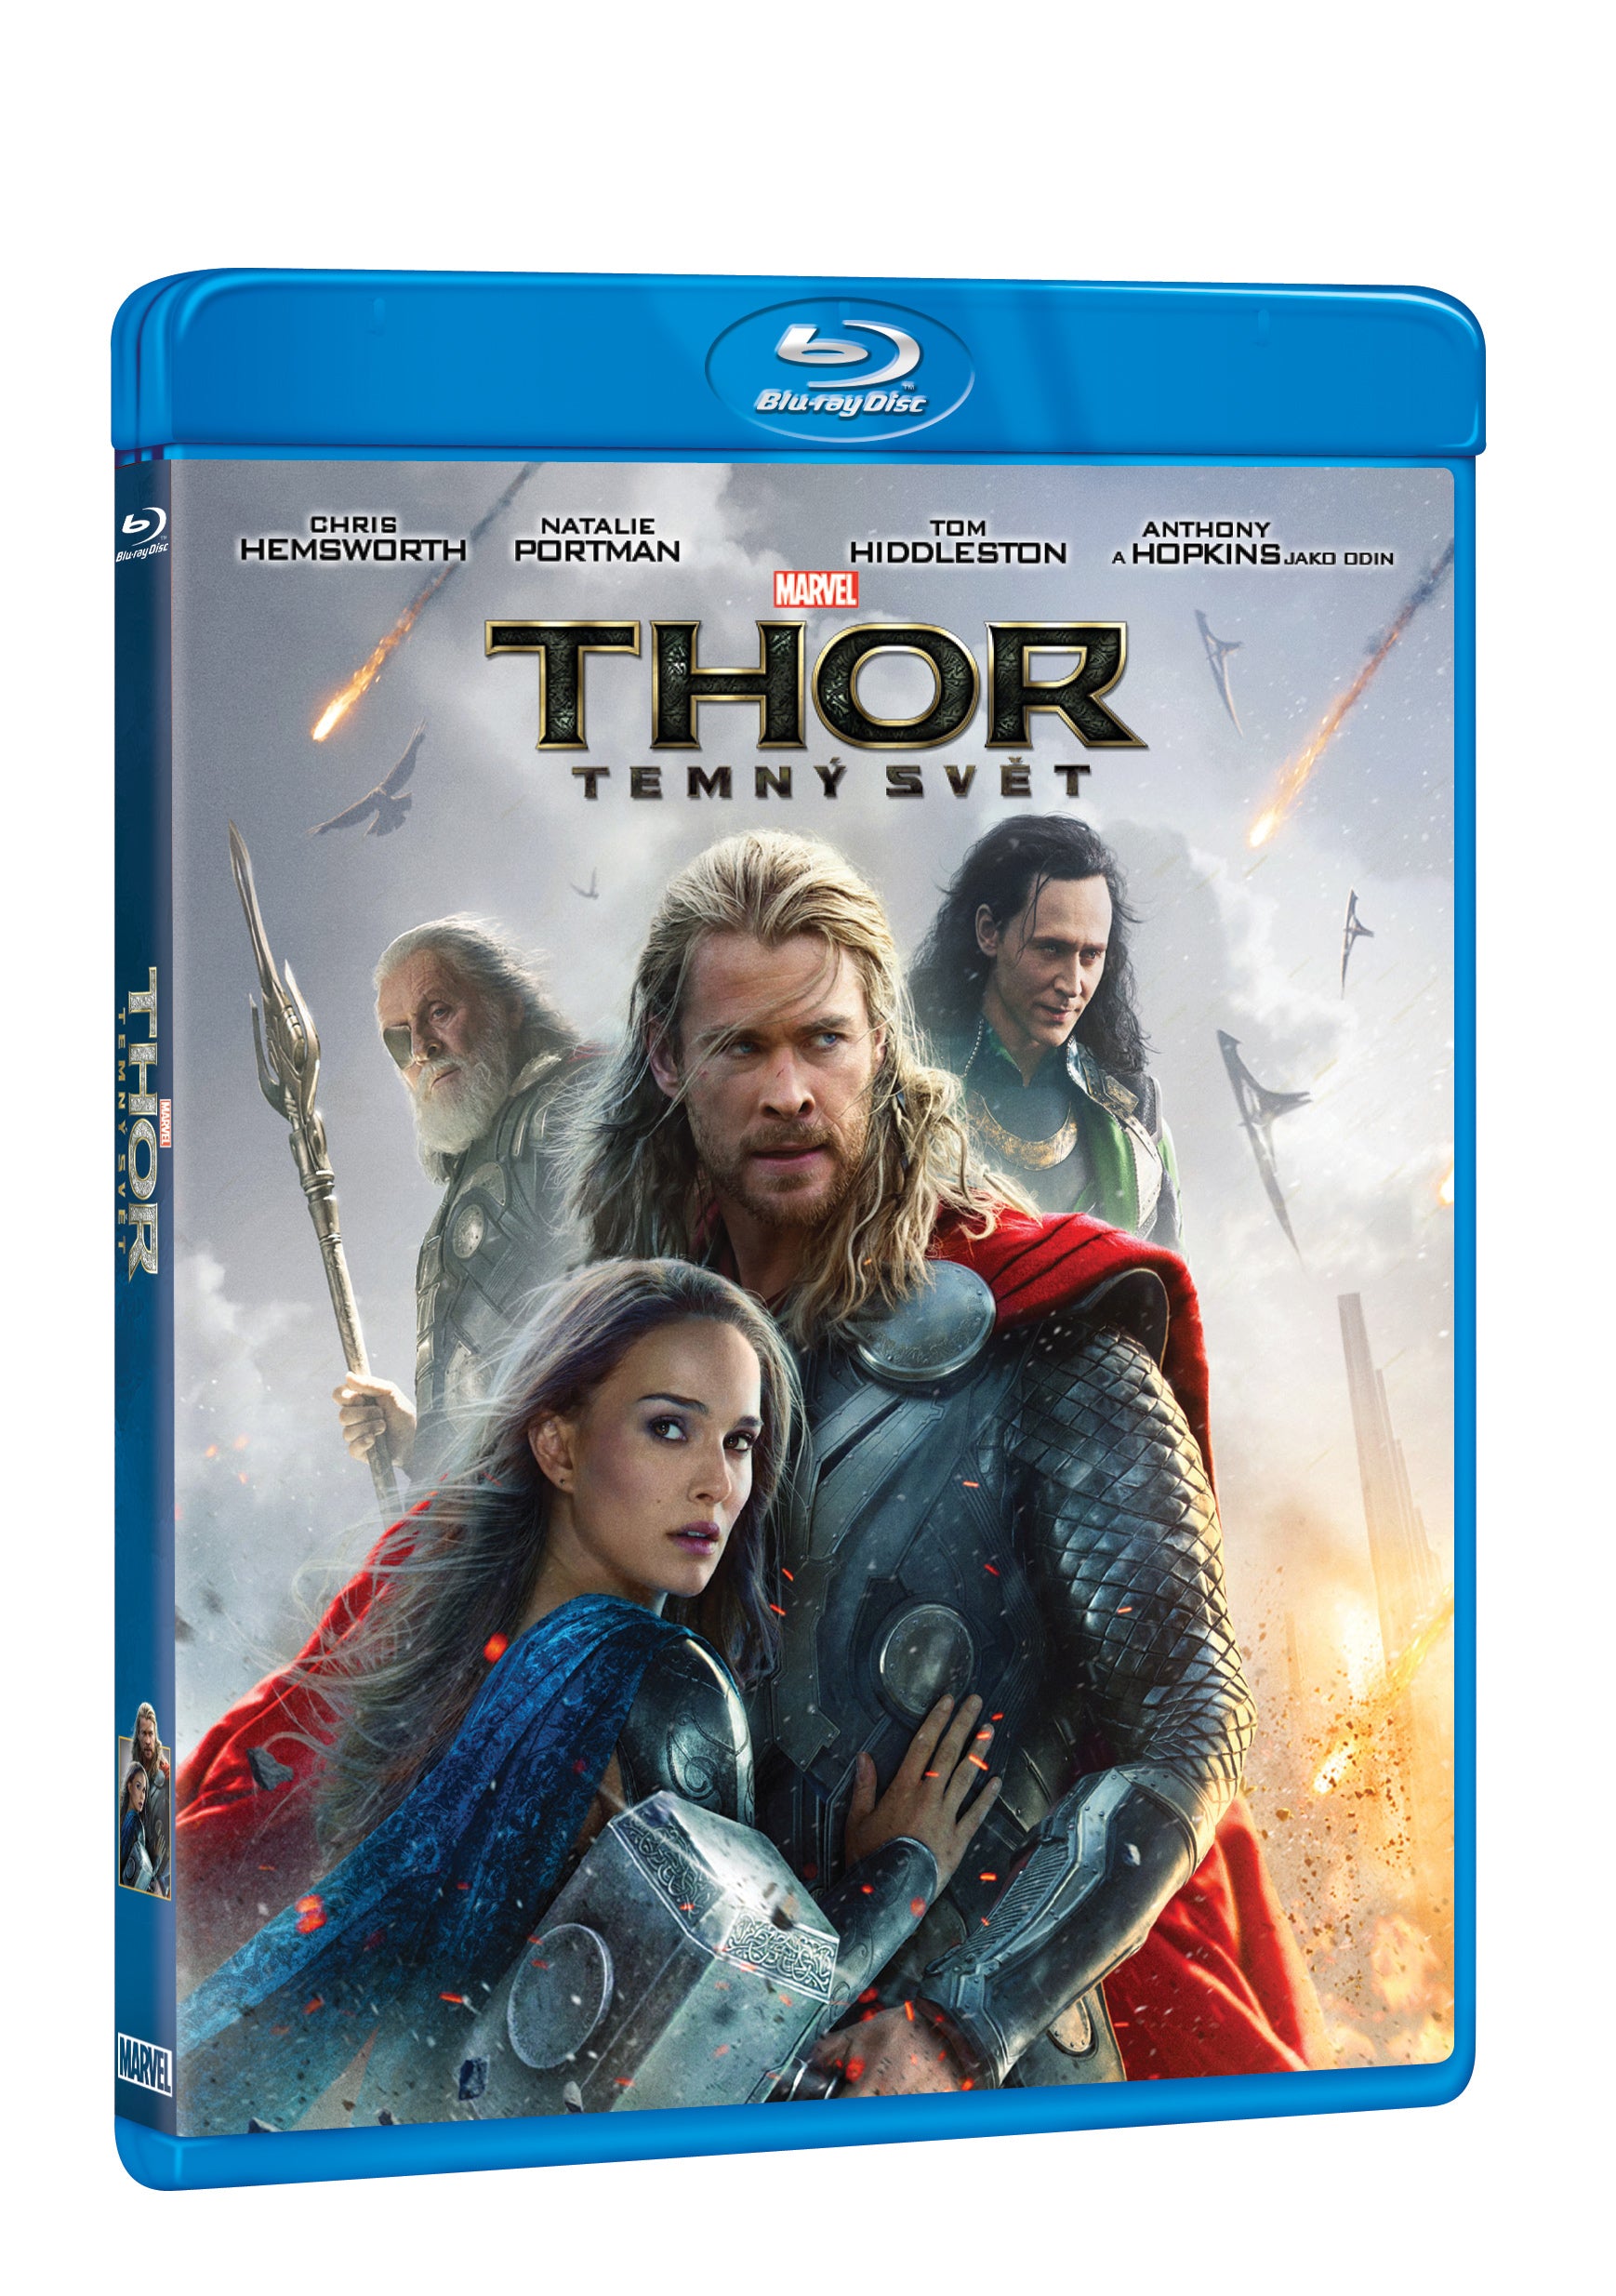 Thor: Temny svet BD / Thor: The Dark World - Czech version